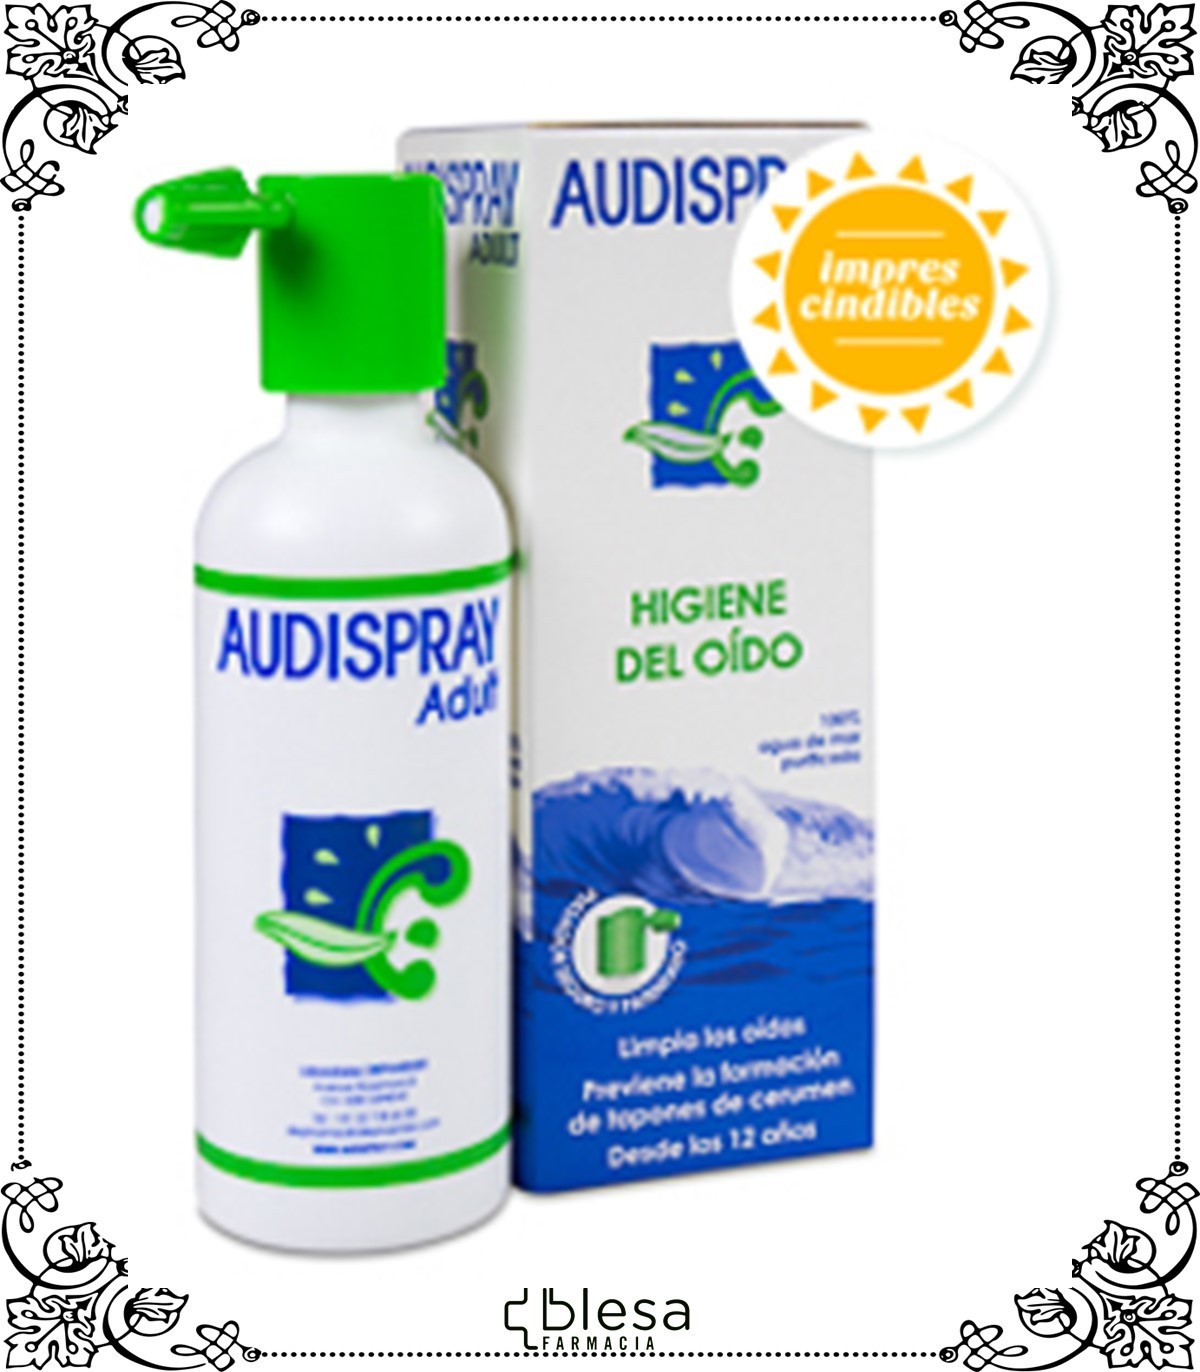 Audispray adult solución limpieza oídos 50ml Audispray